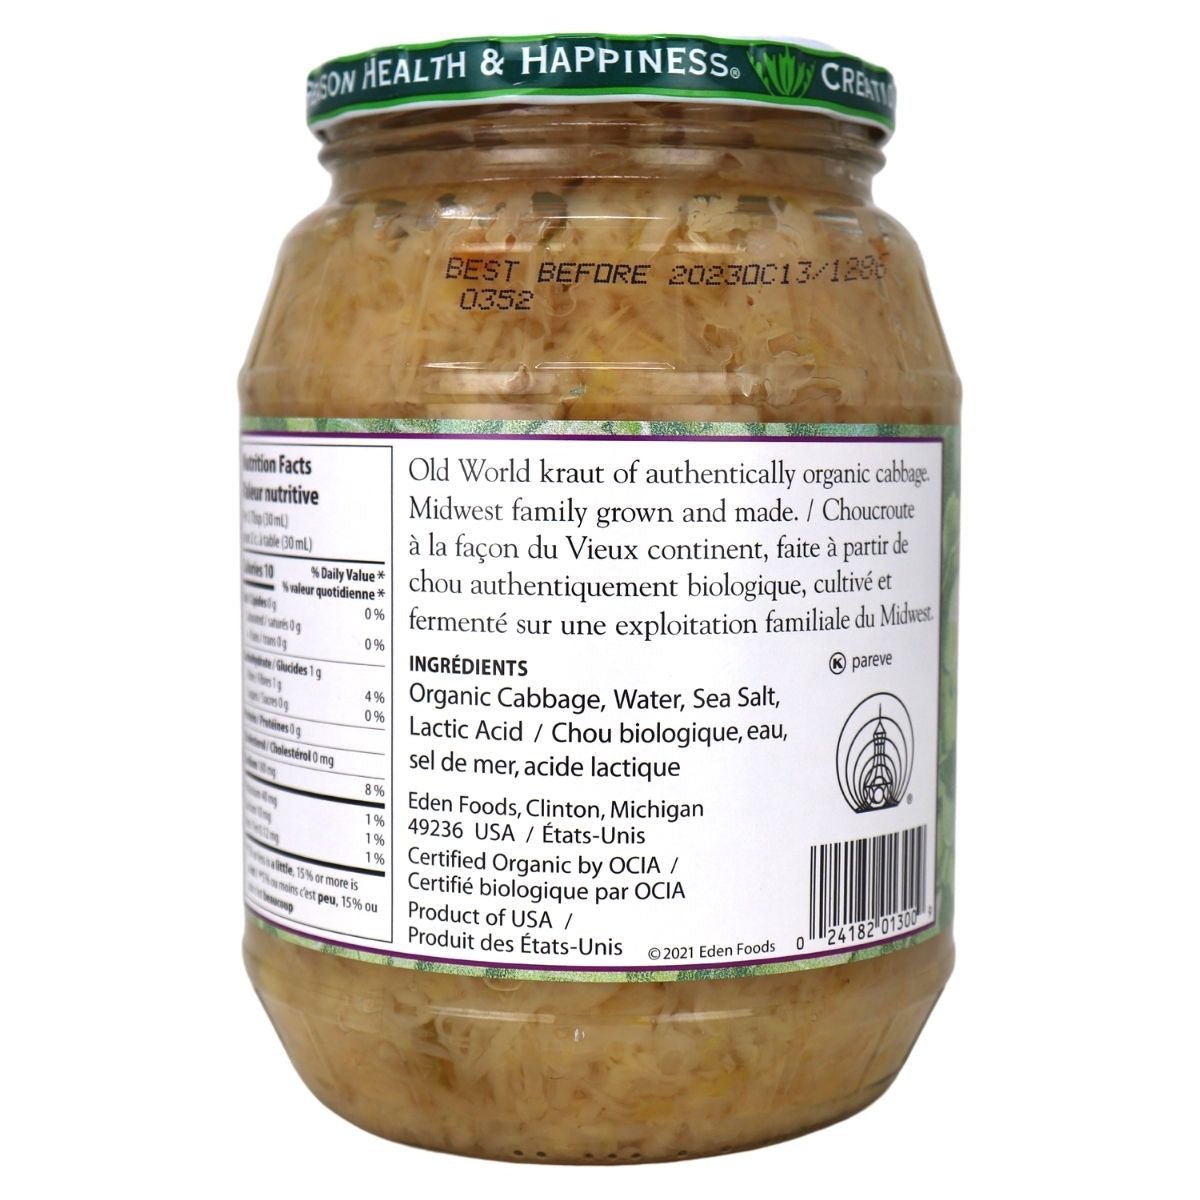 Eden Foods Organic Sauerkraut, 796mL - Nutrition Plus